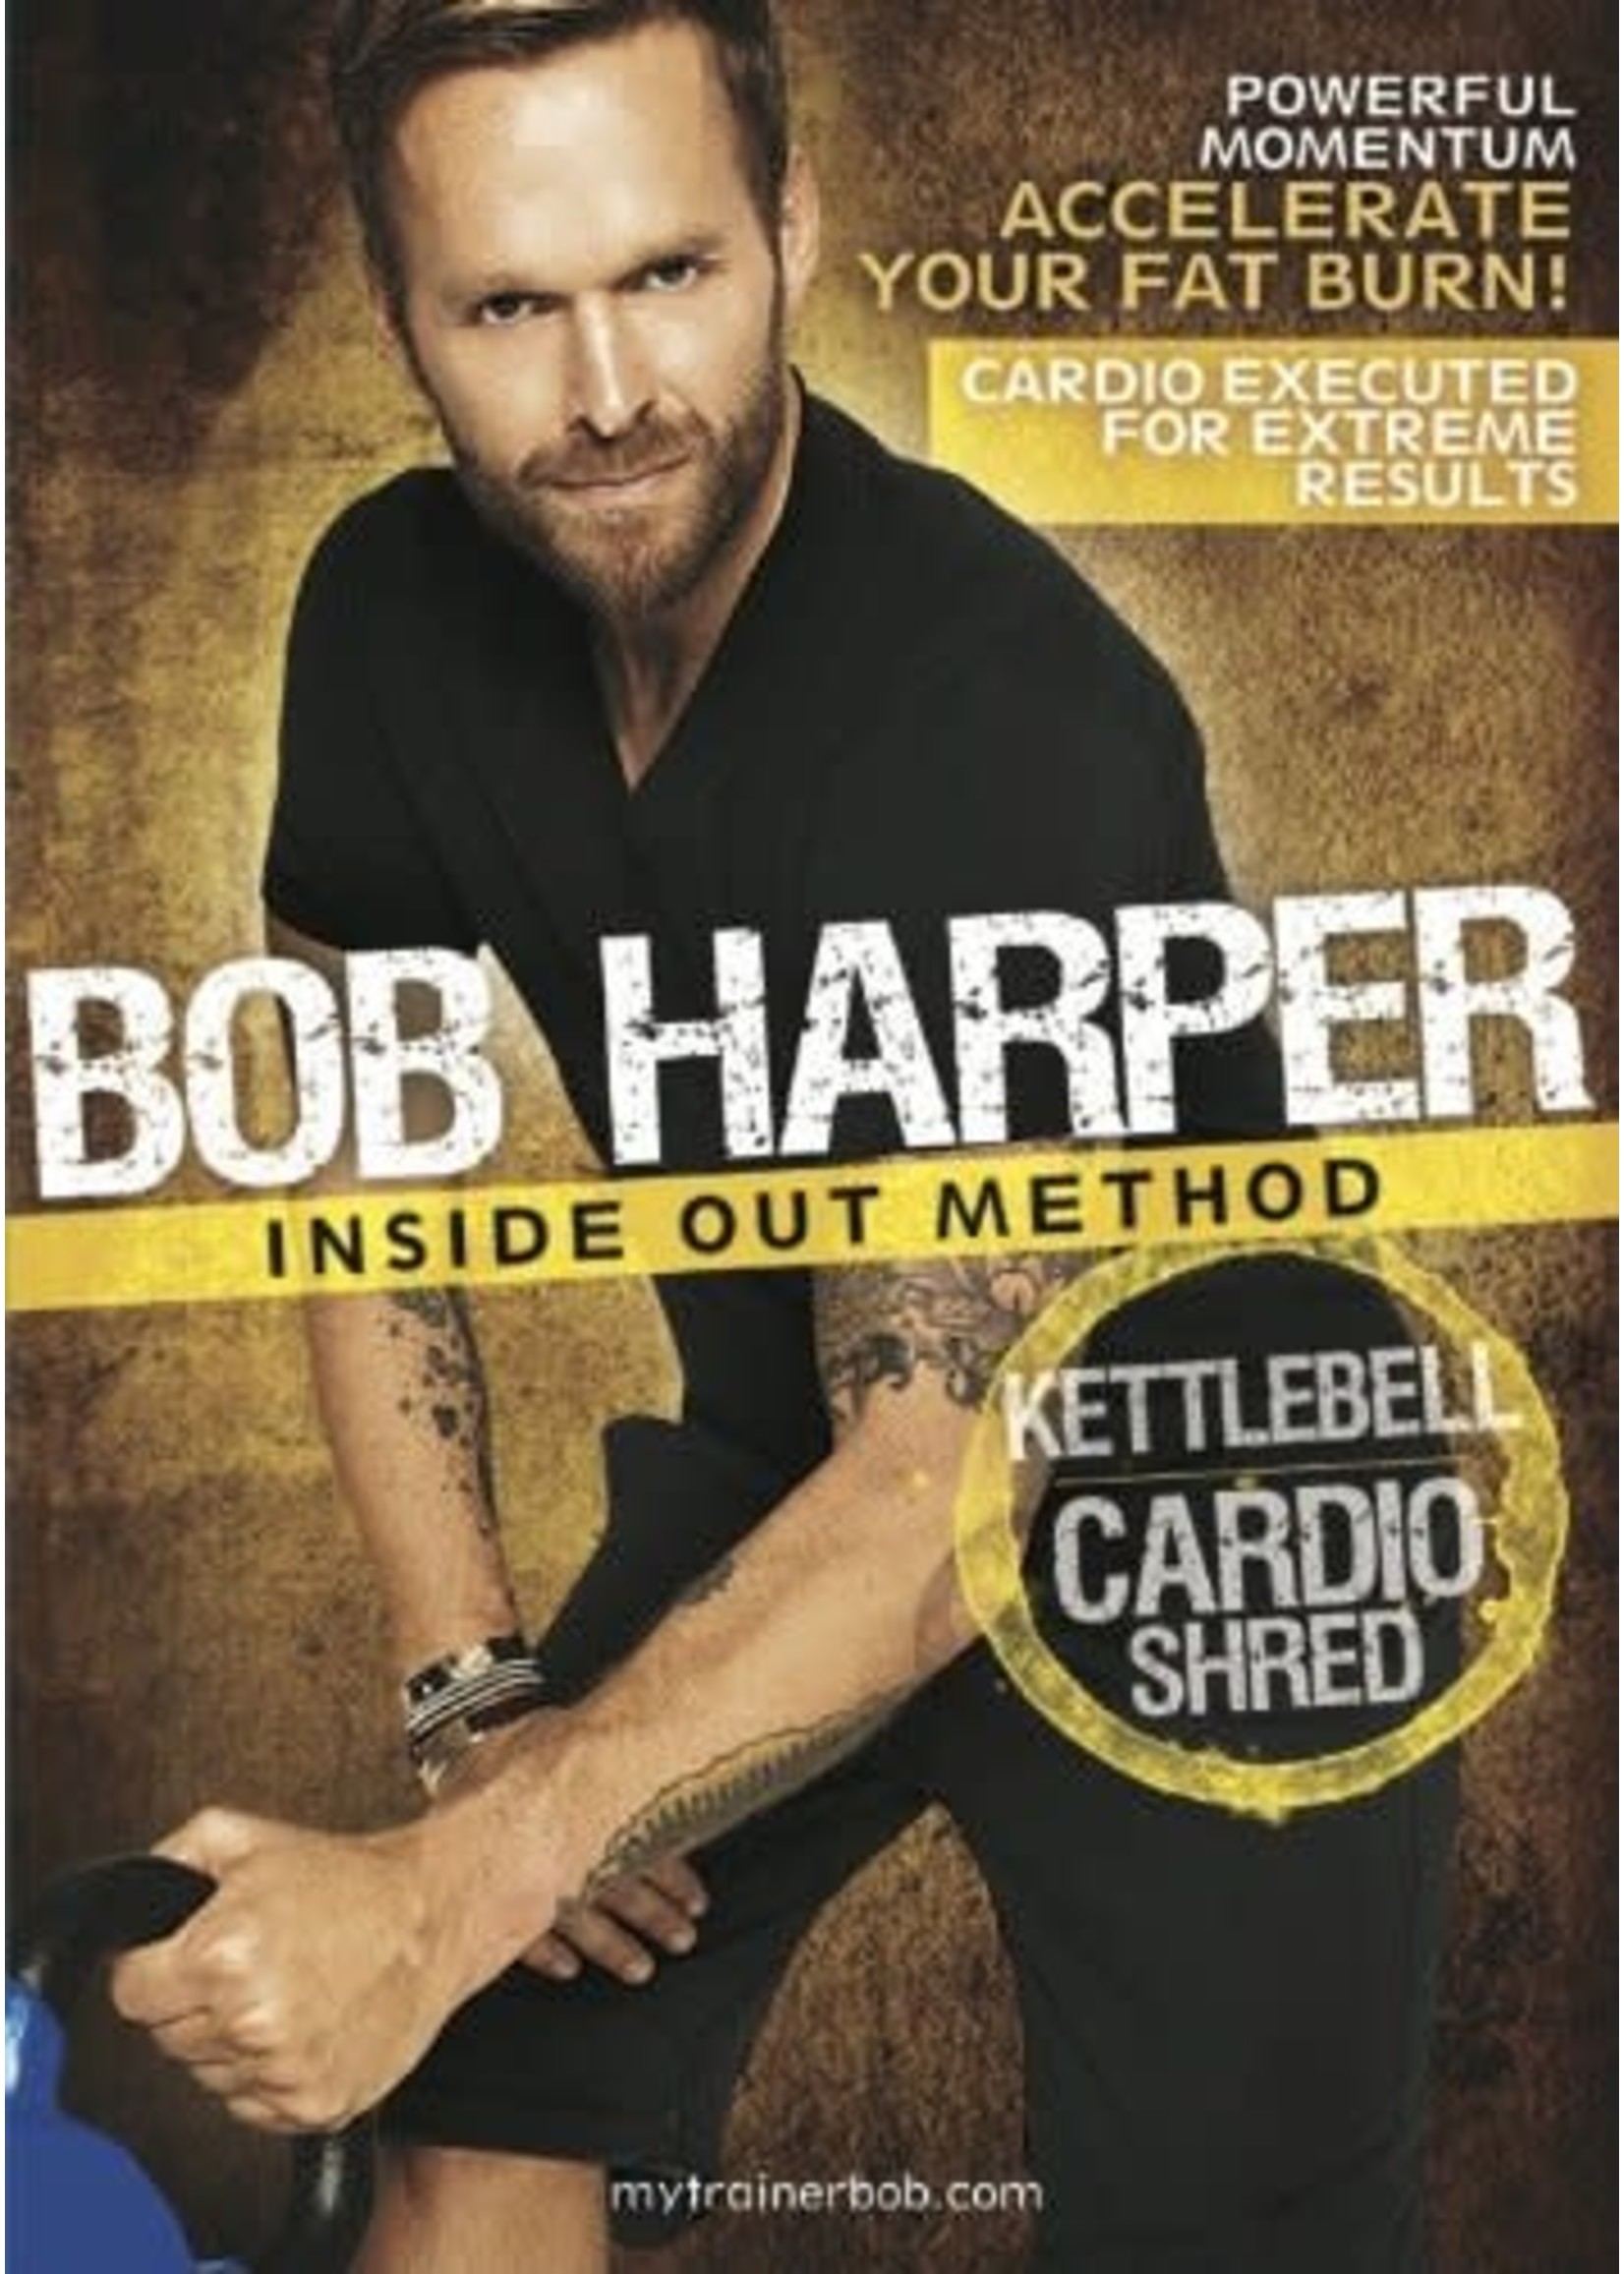 Gofit Bob Harper Inside Out Method - Kettlebell Cardio Shred Workout DVD, Cardio Fitness, Maximum Fat Burn, by Gofit